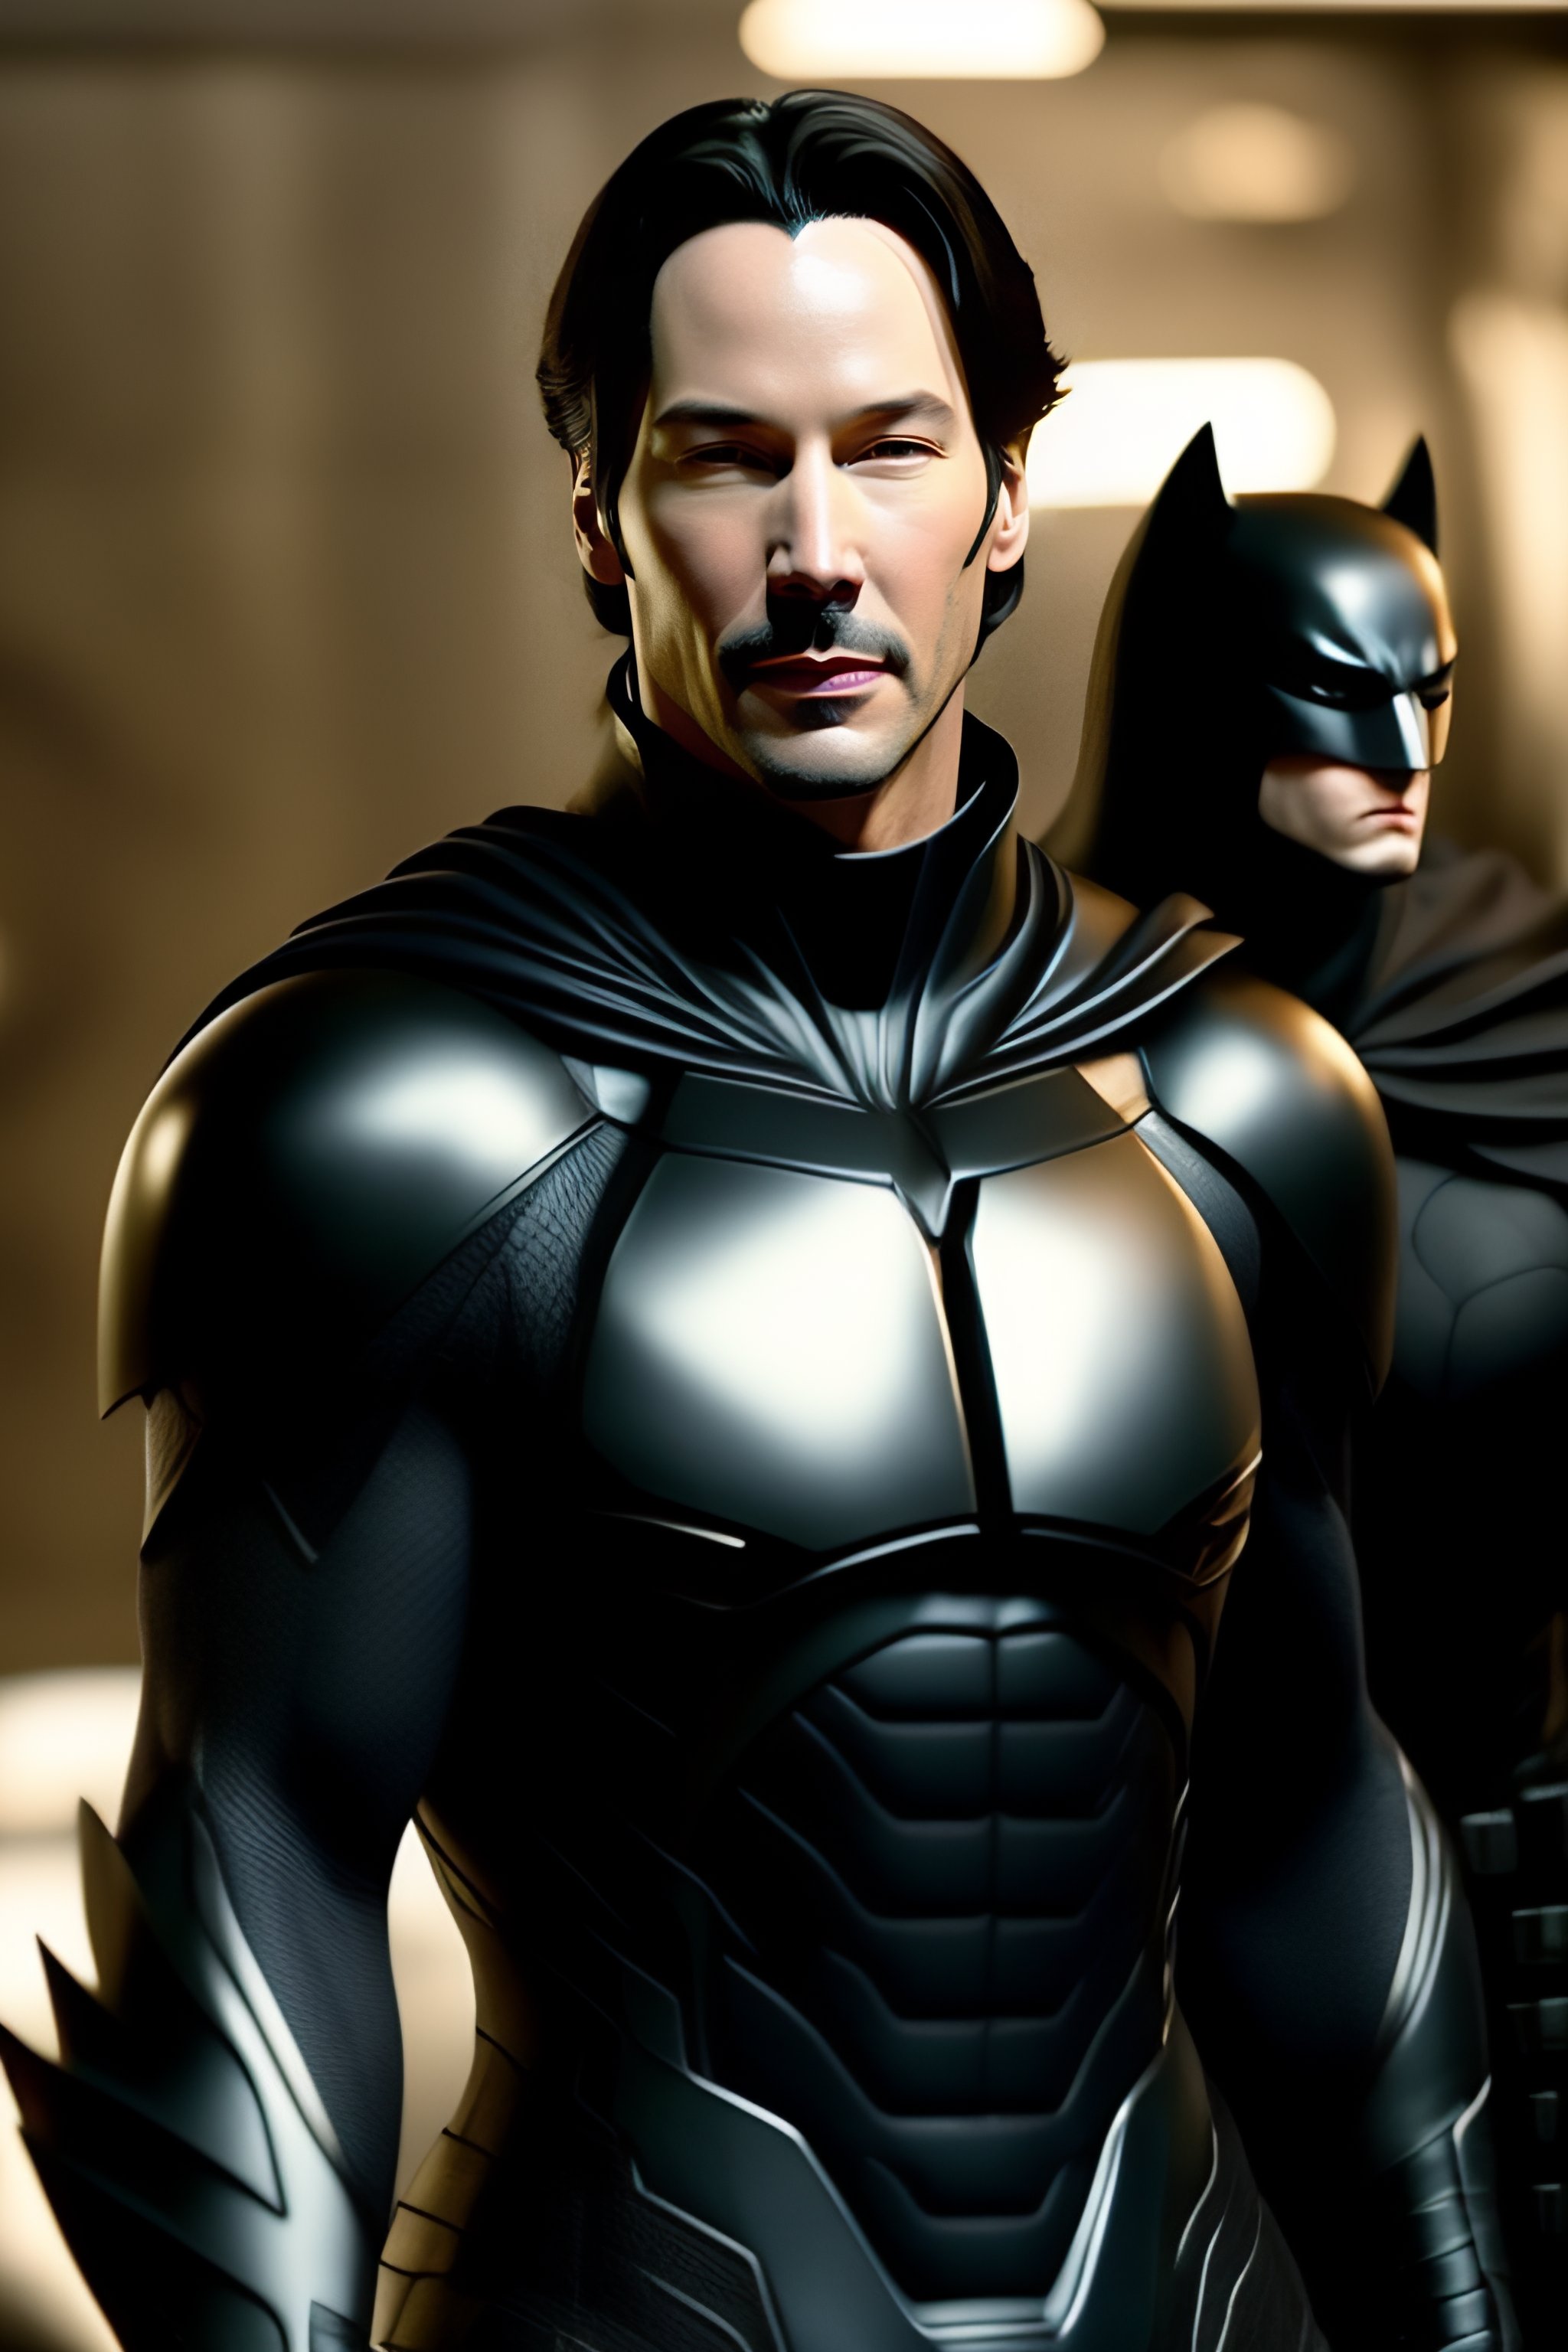 Lexica - Keanu Reeves as bruce wayne with batsuit in batman movie, full body